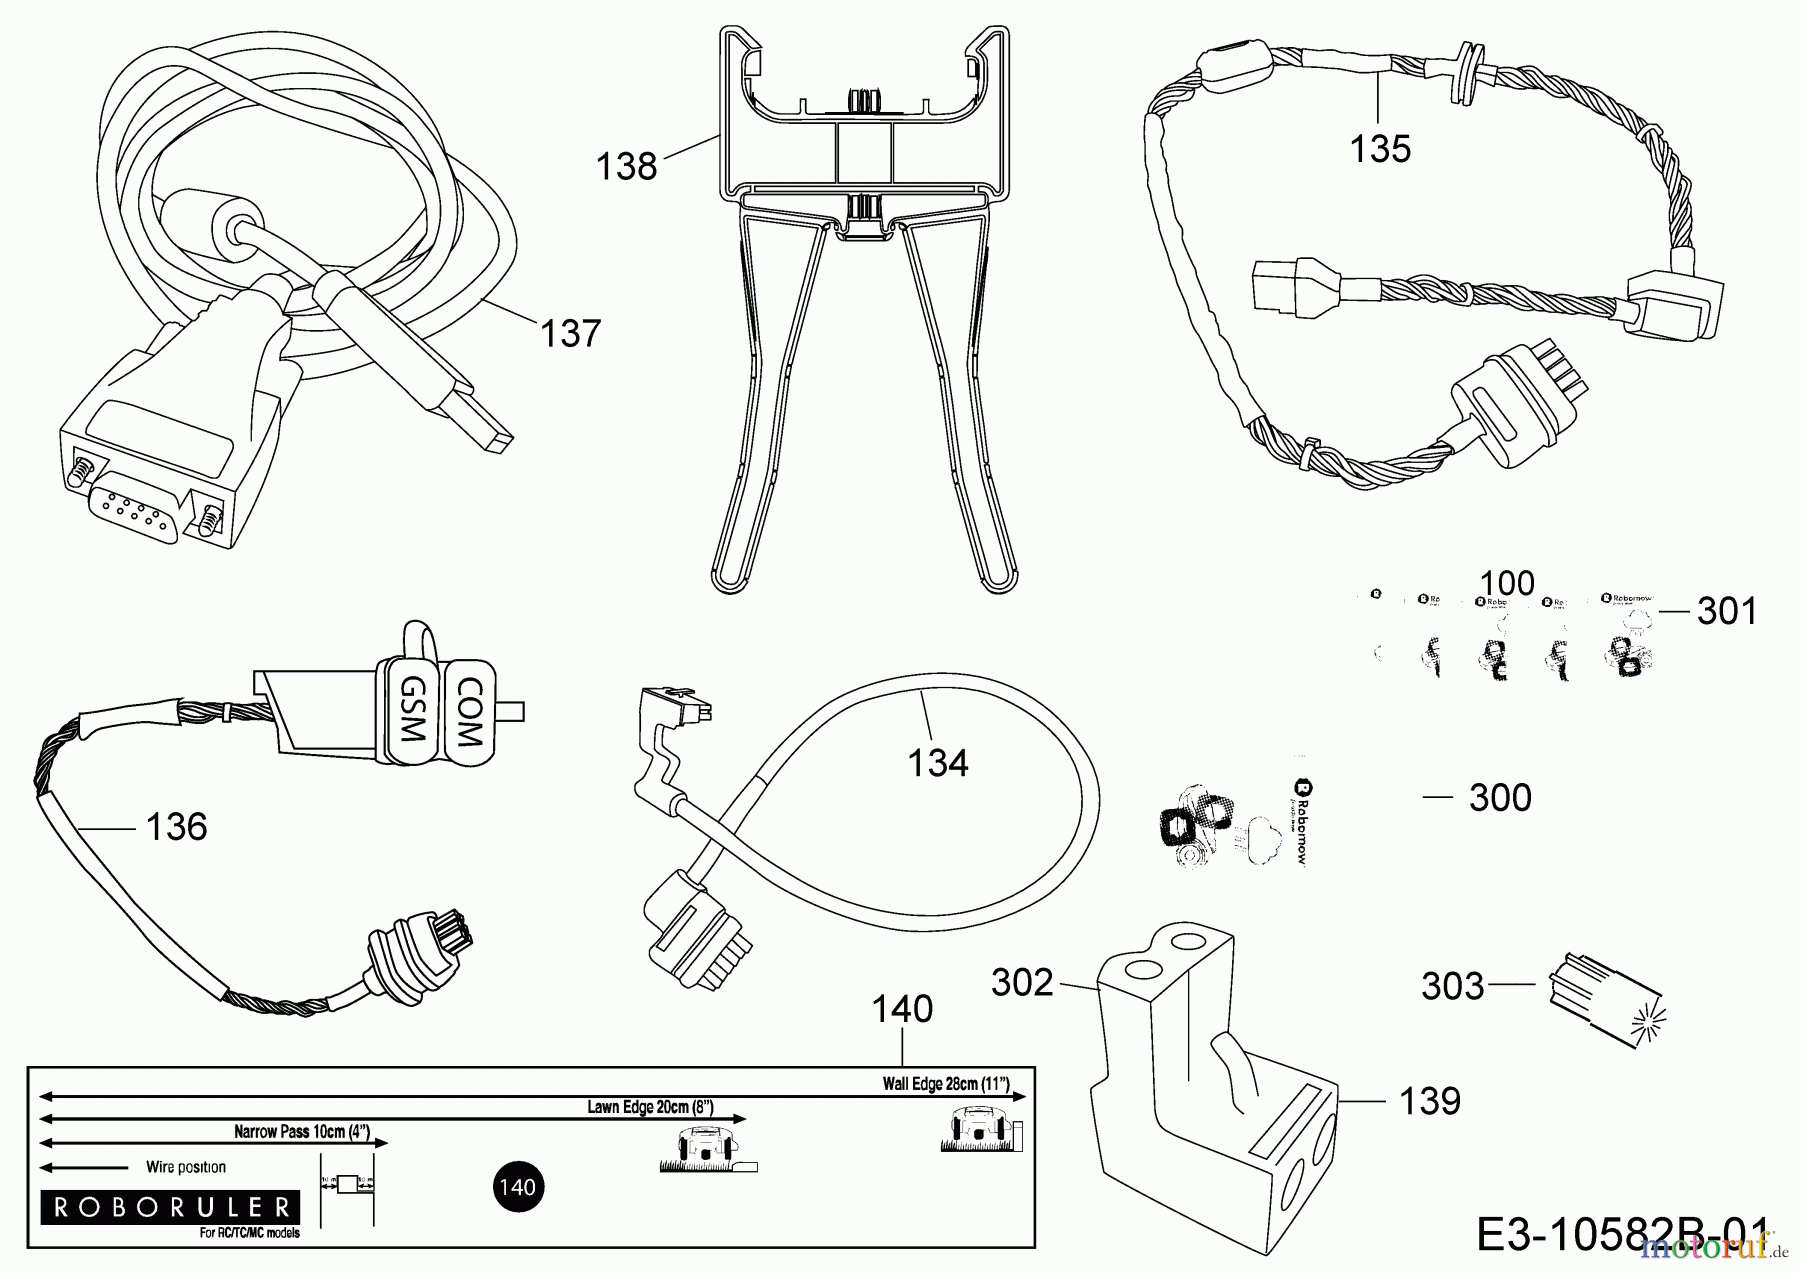  Robomow Mähroboter RC312 PRO PRD7012N  (2016) Kabel, Kabelanschluß, Regensensor, Werkzeug